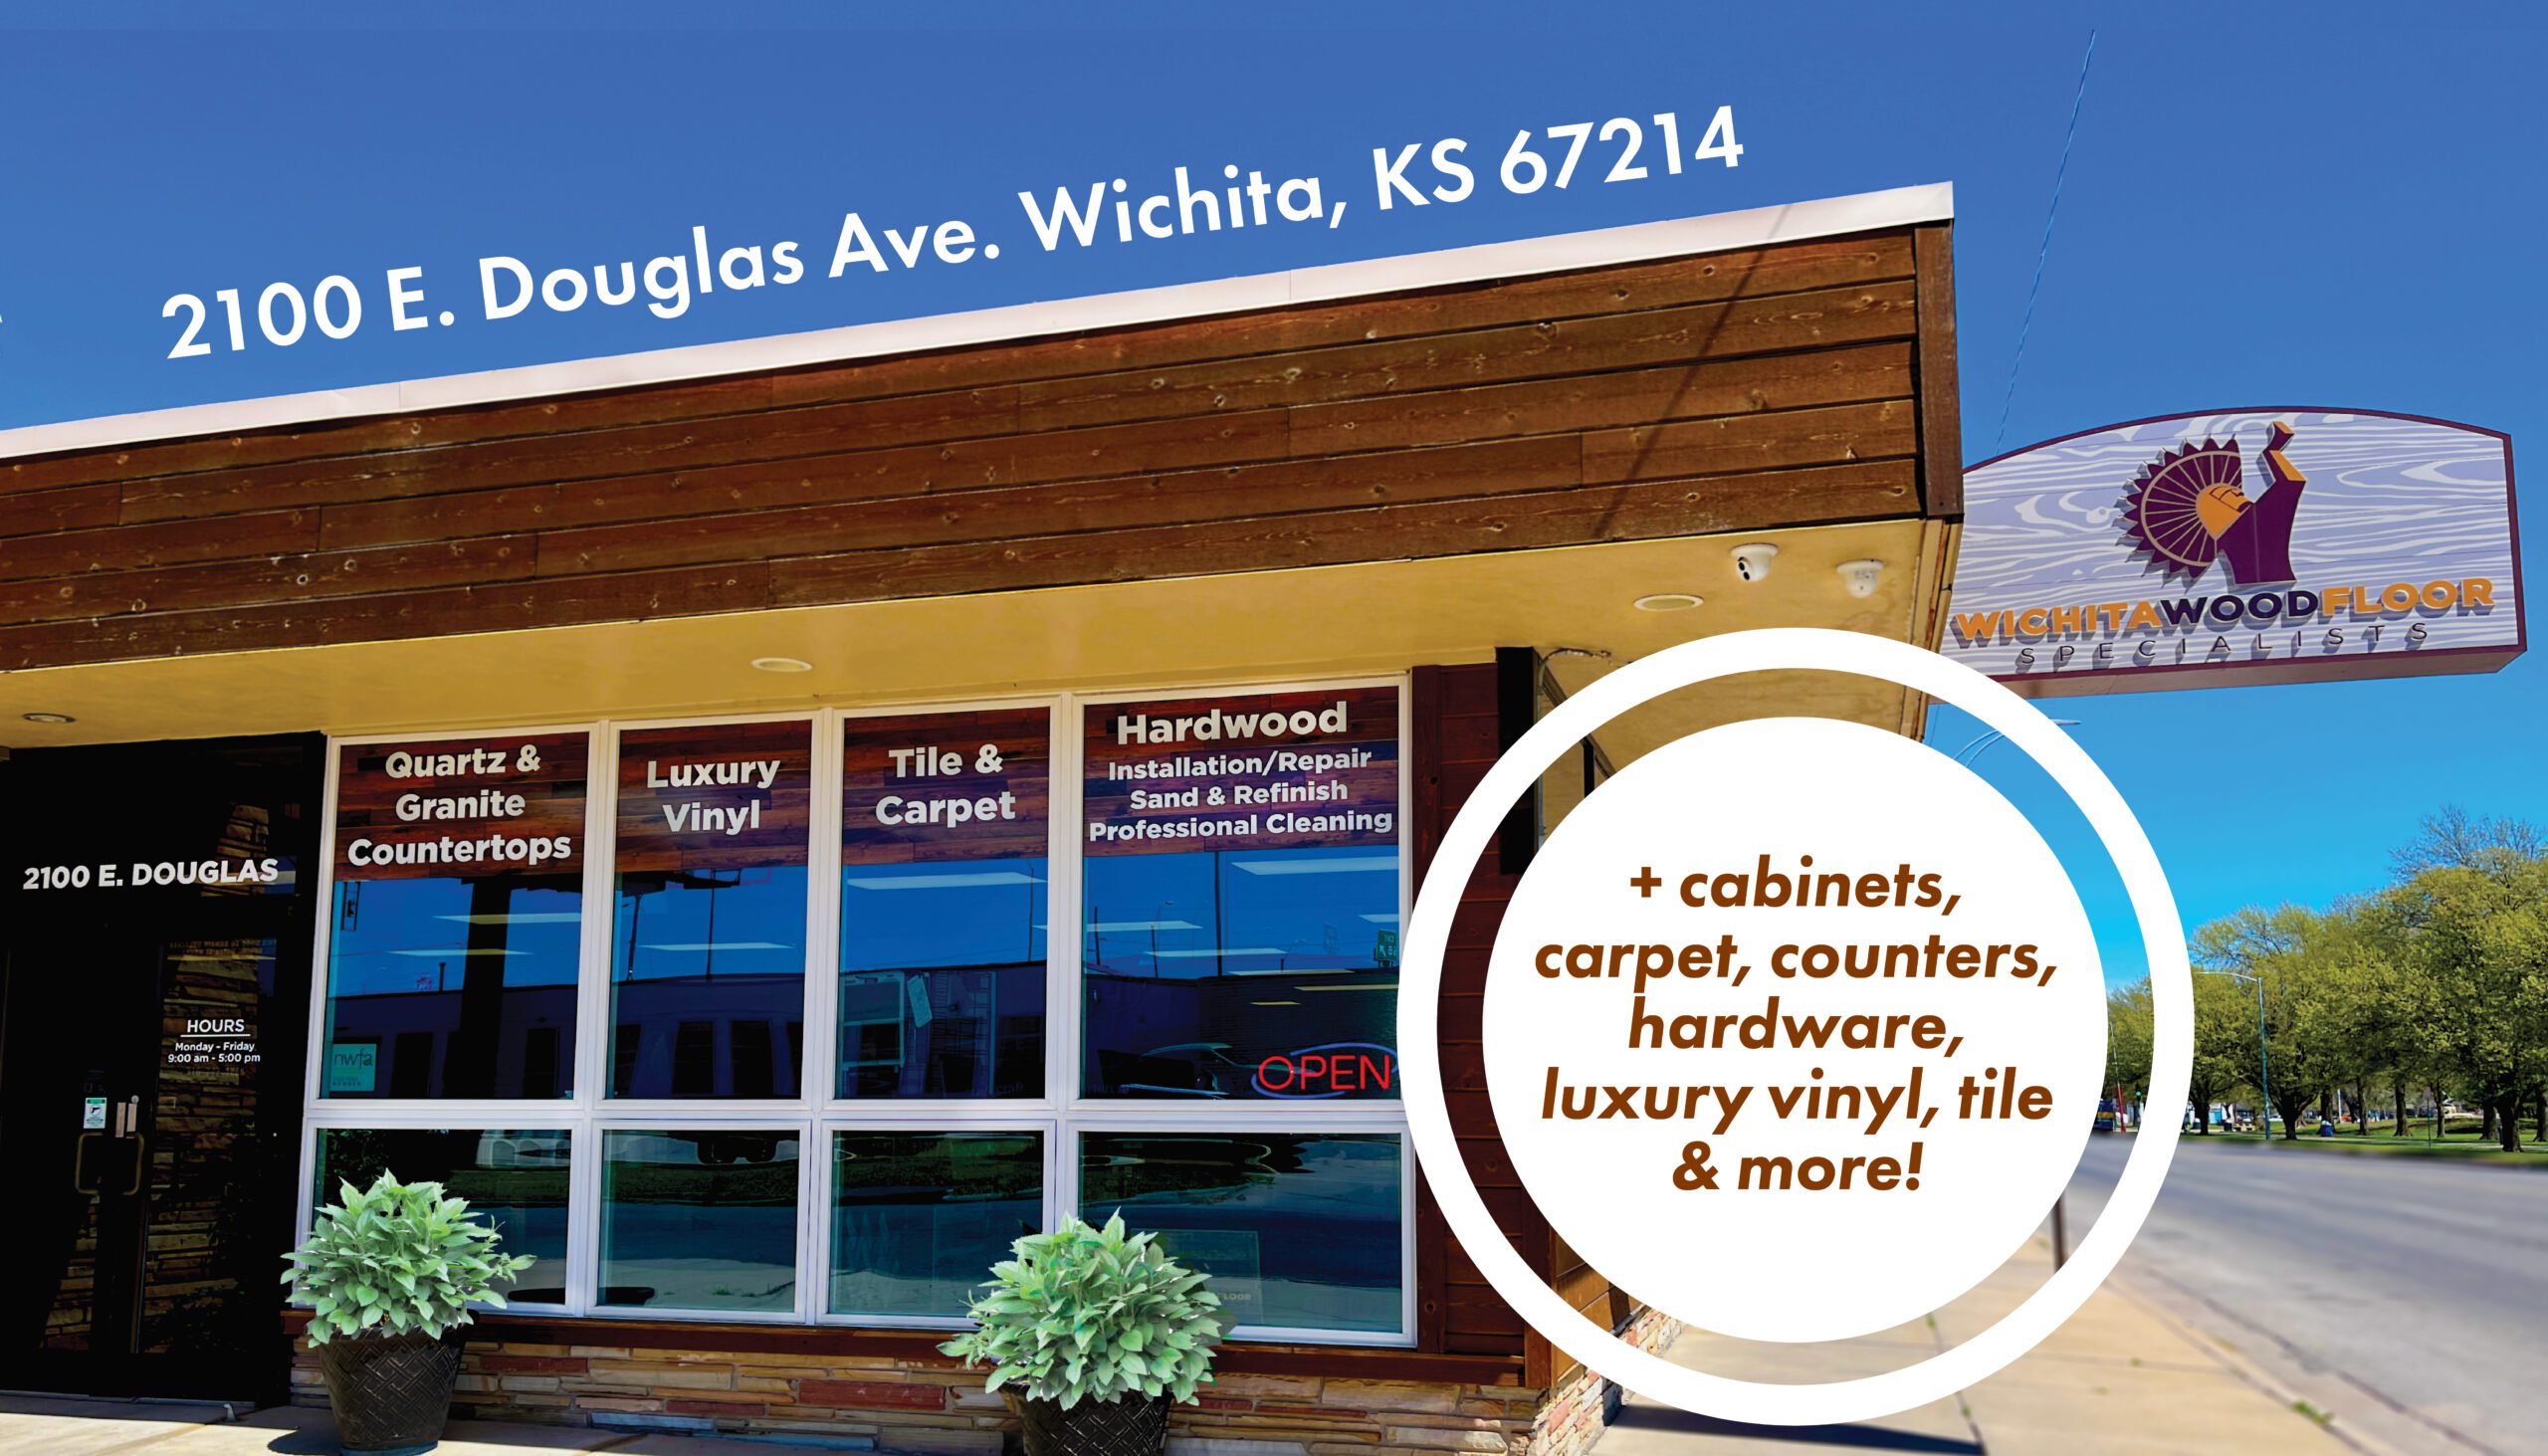 Photo of Wichita Wood Floor Specialists showroom building exterior located at 2100 E Douglas Ave Wichita KS 67214